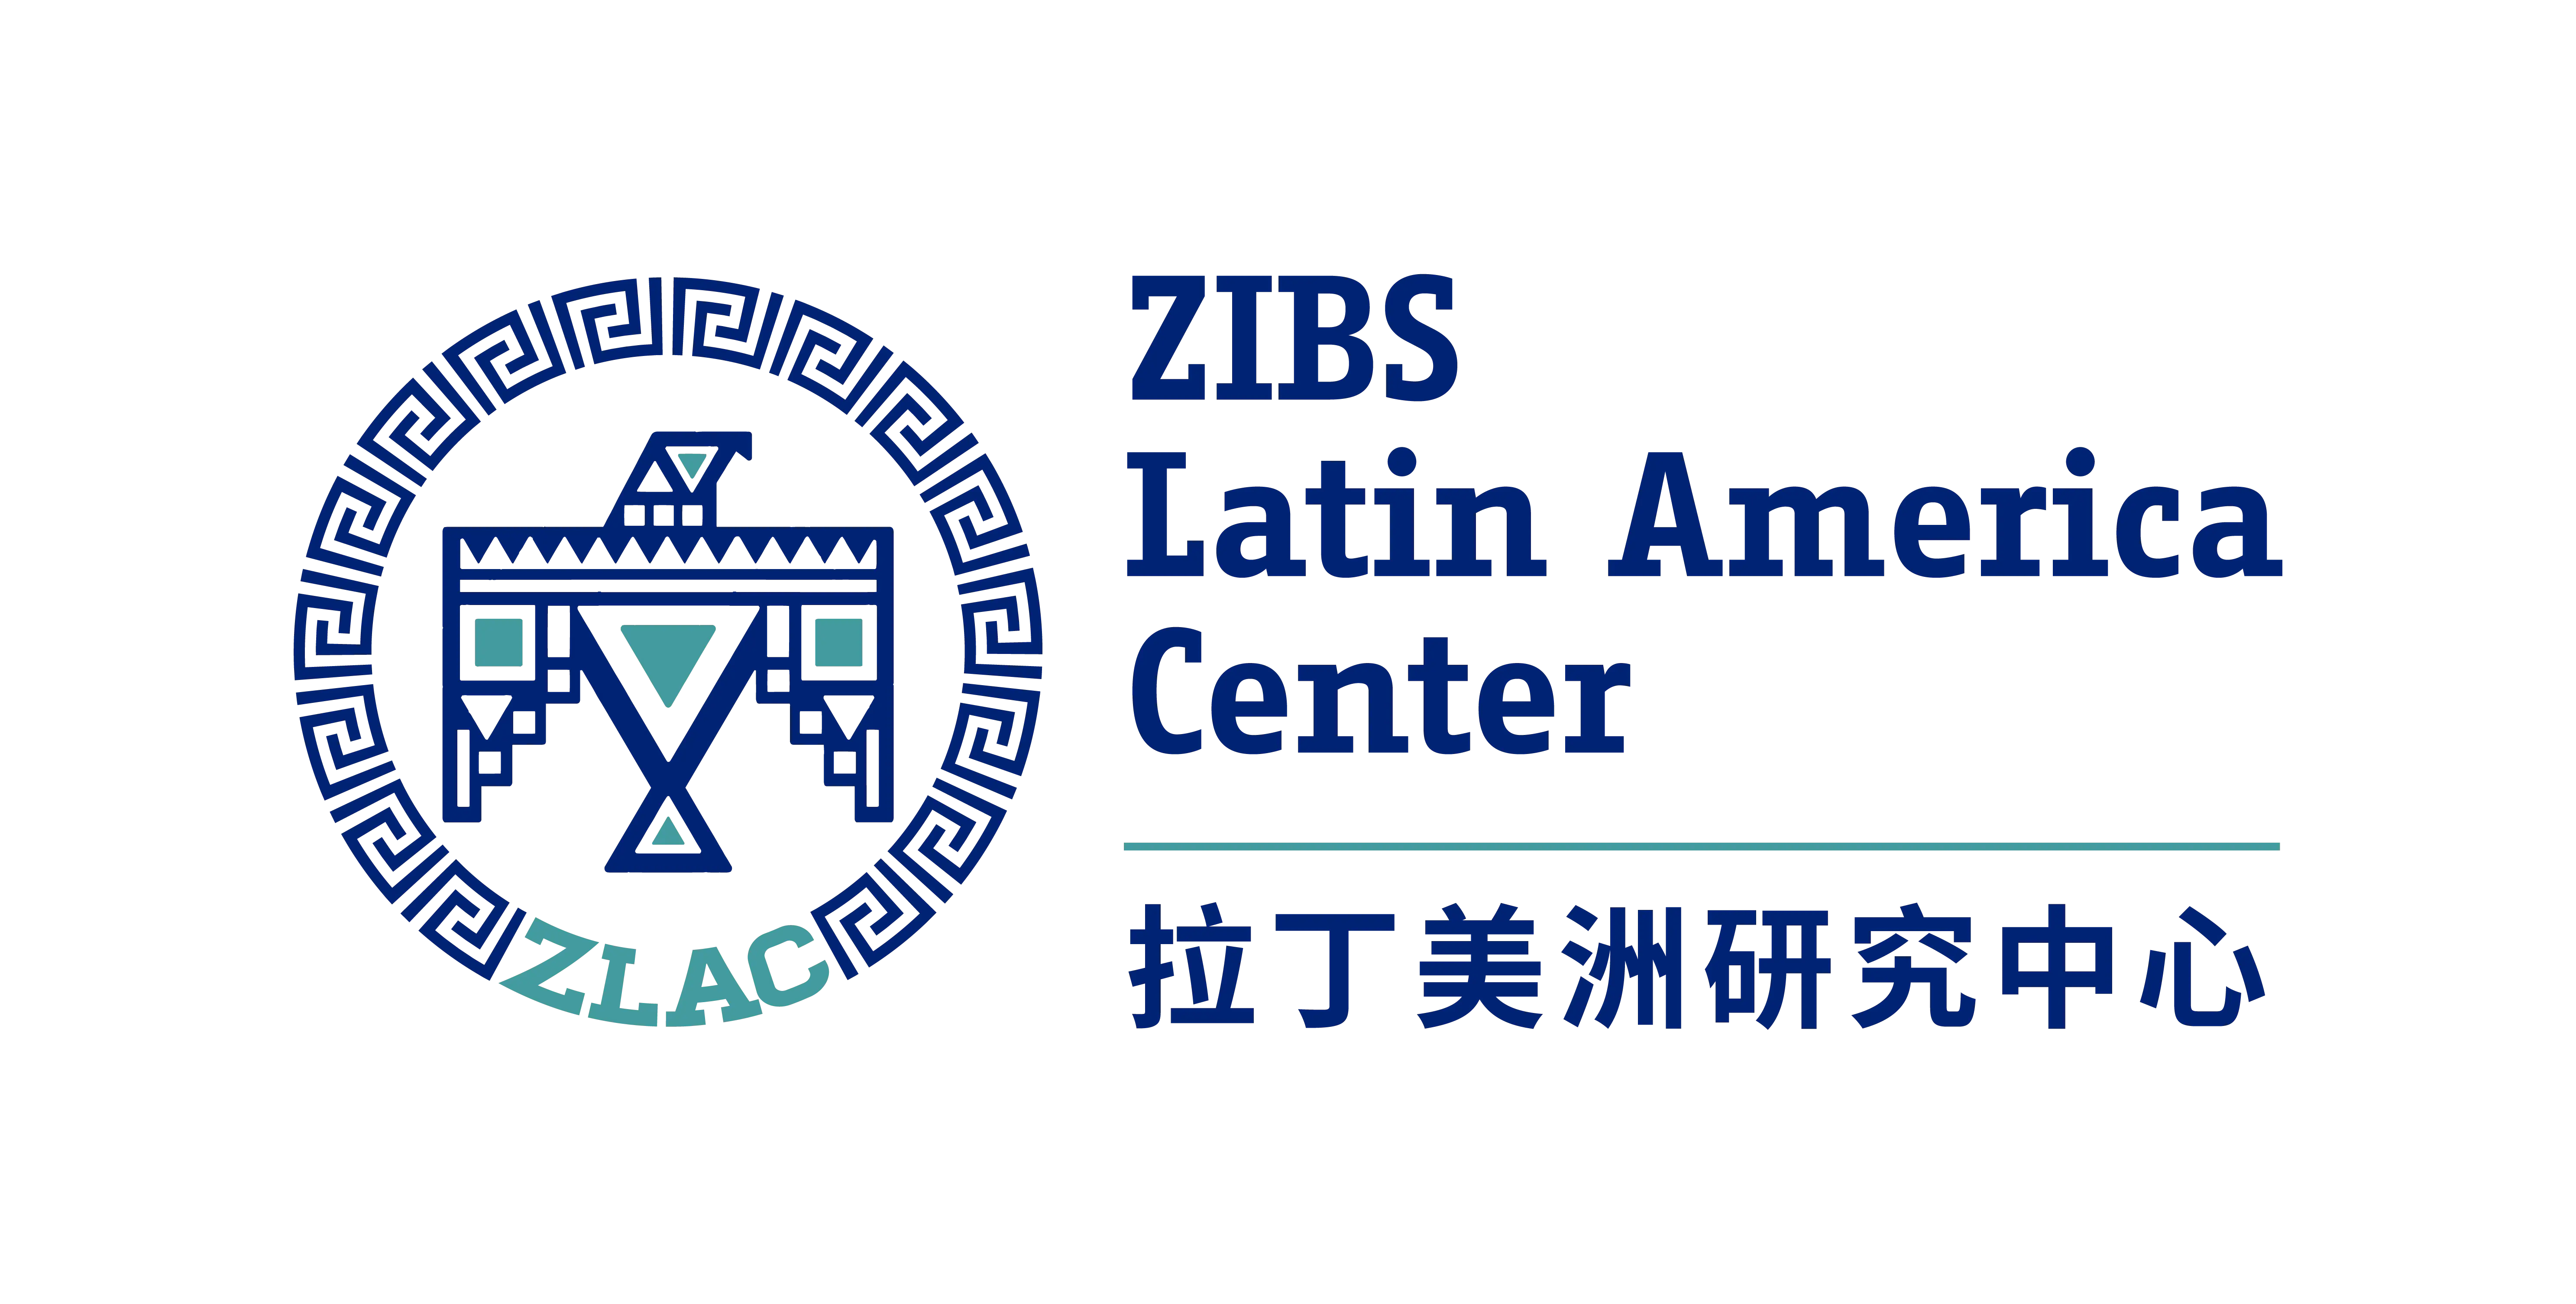  ZIBS Latin America Center